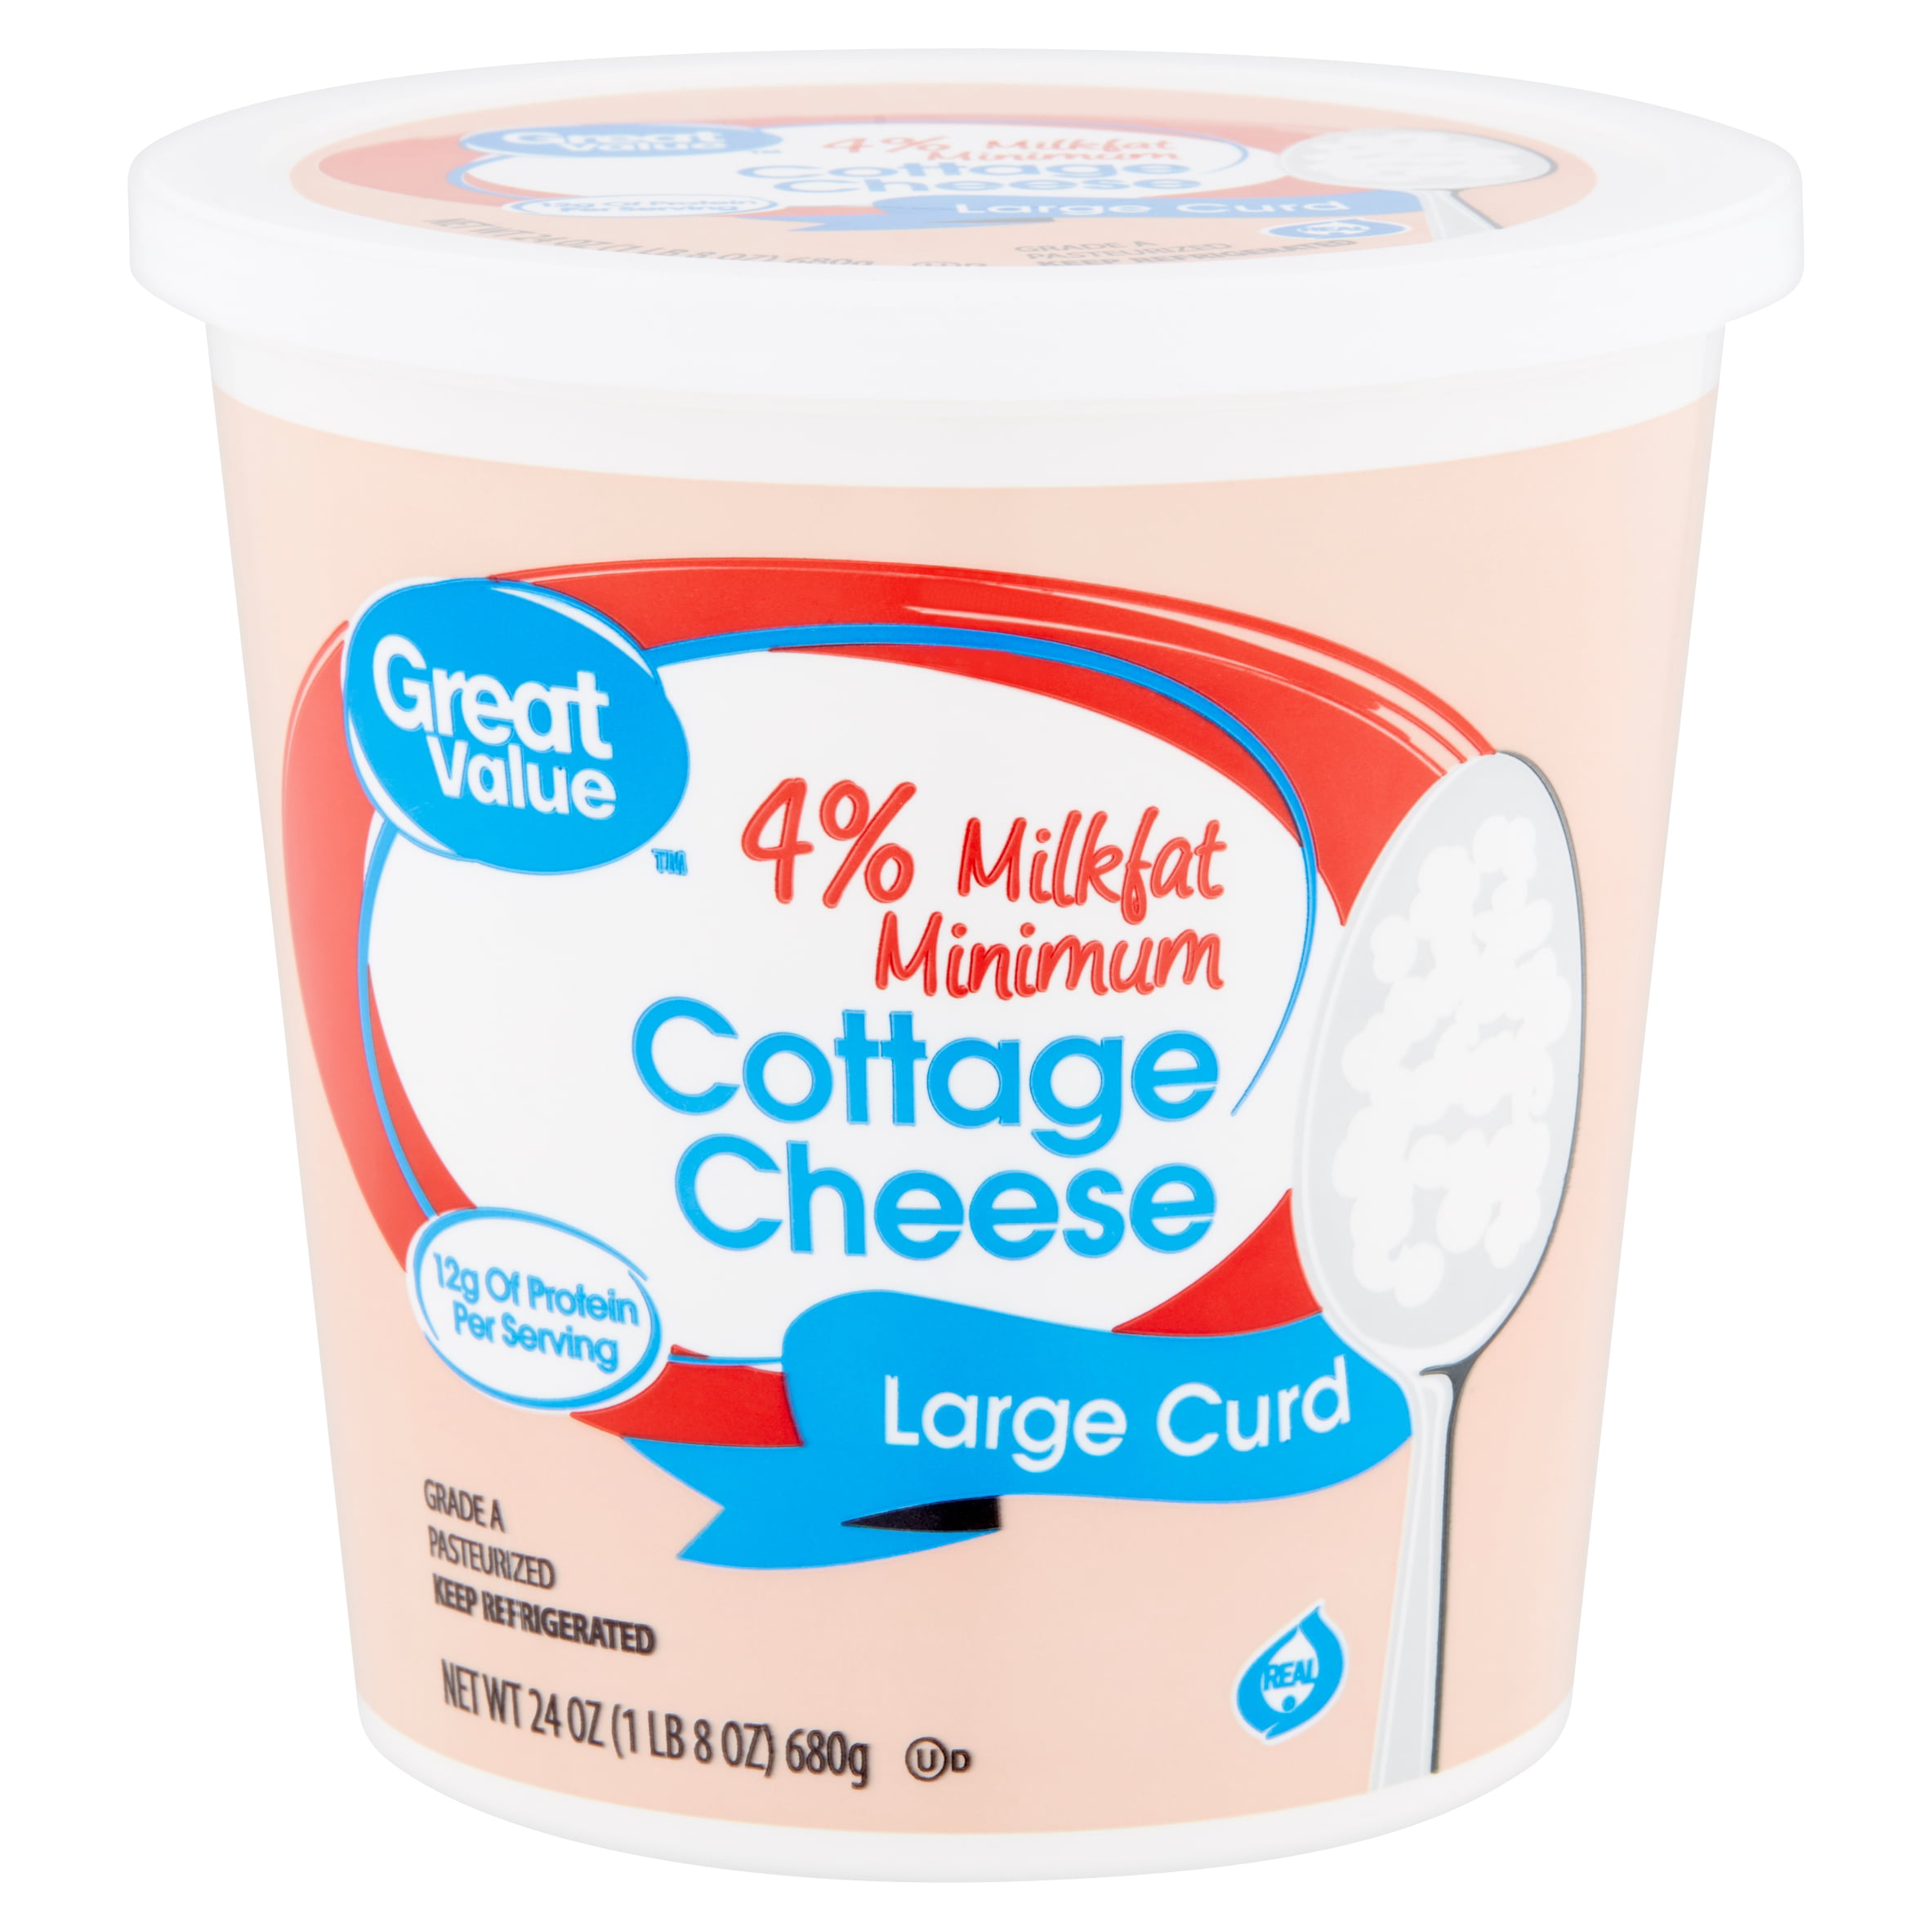 Great Value 4 Milkfat Minimum Large Curd Cottage Cheese 24 Oz